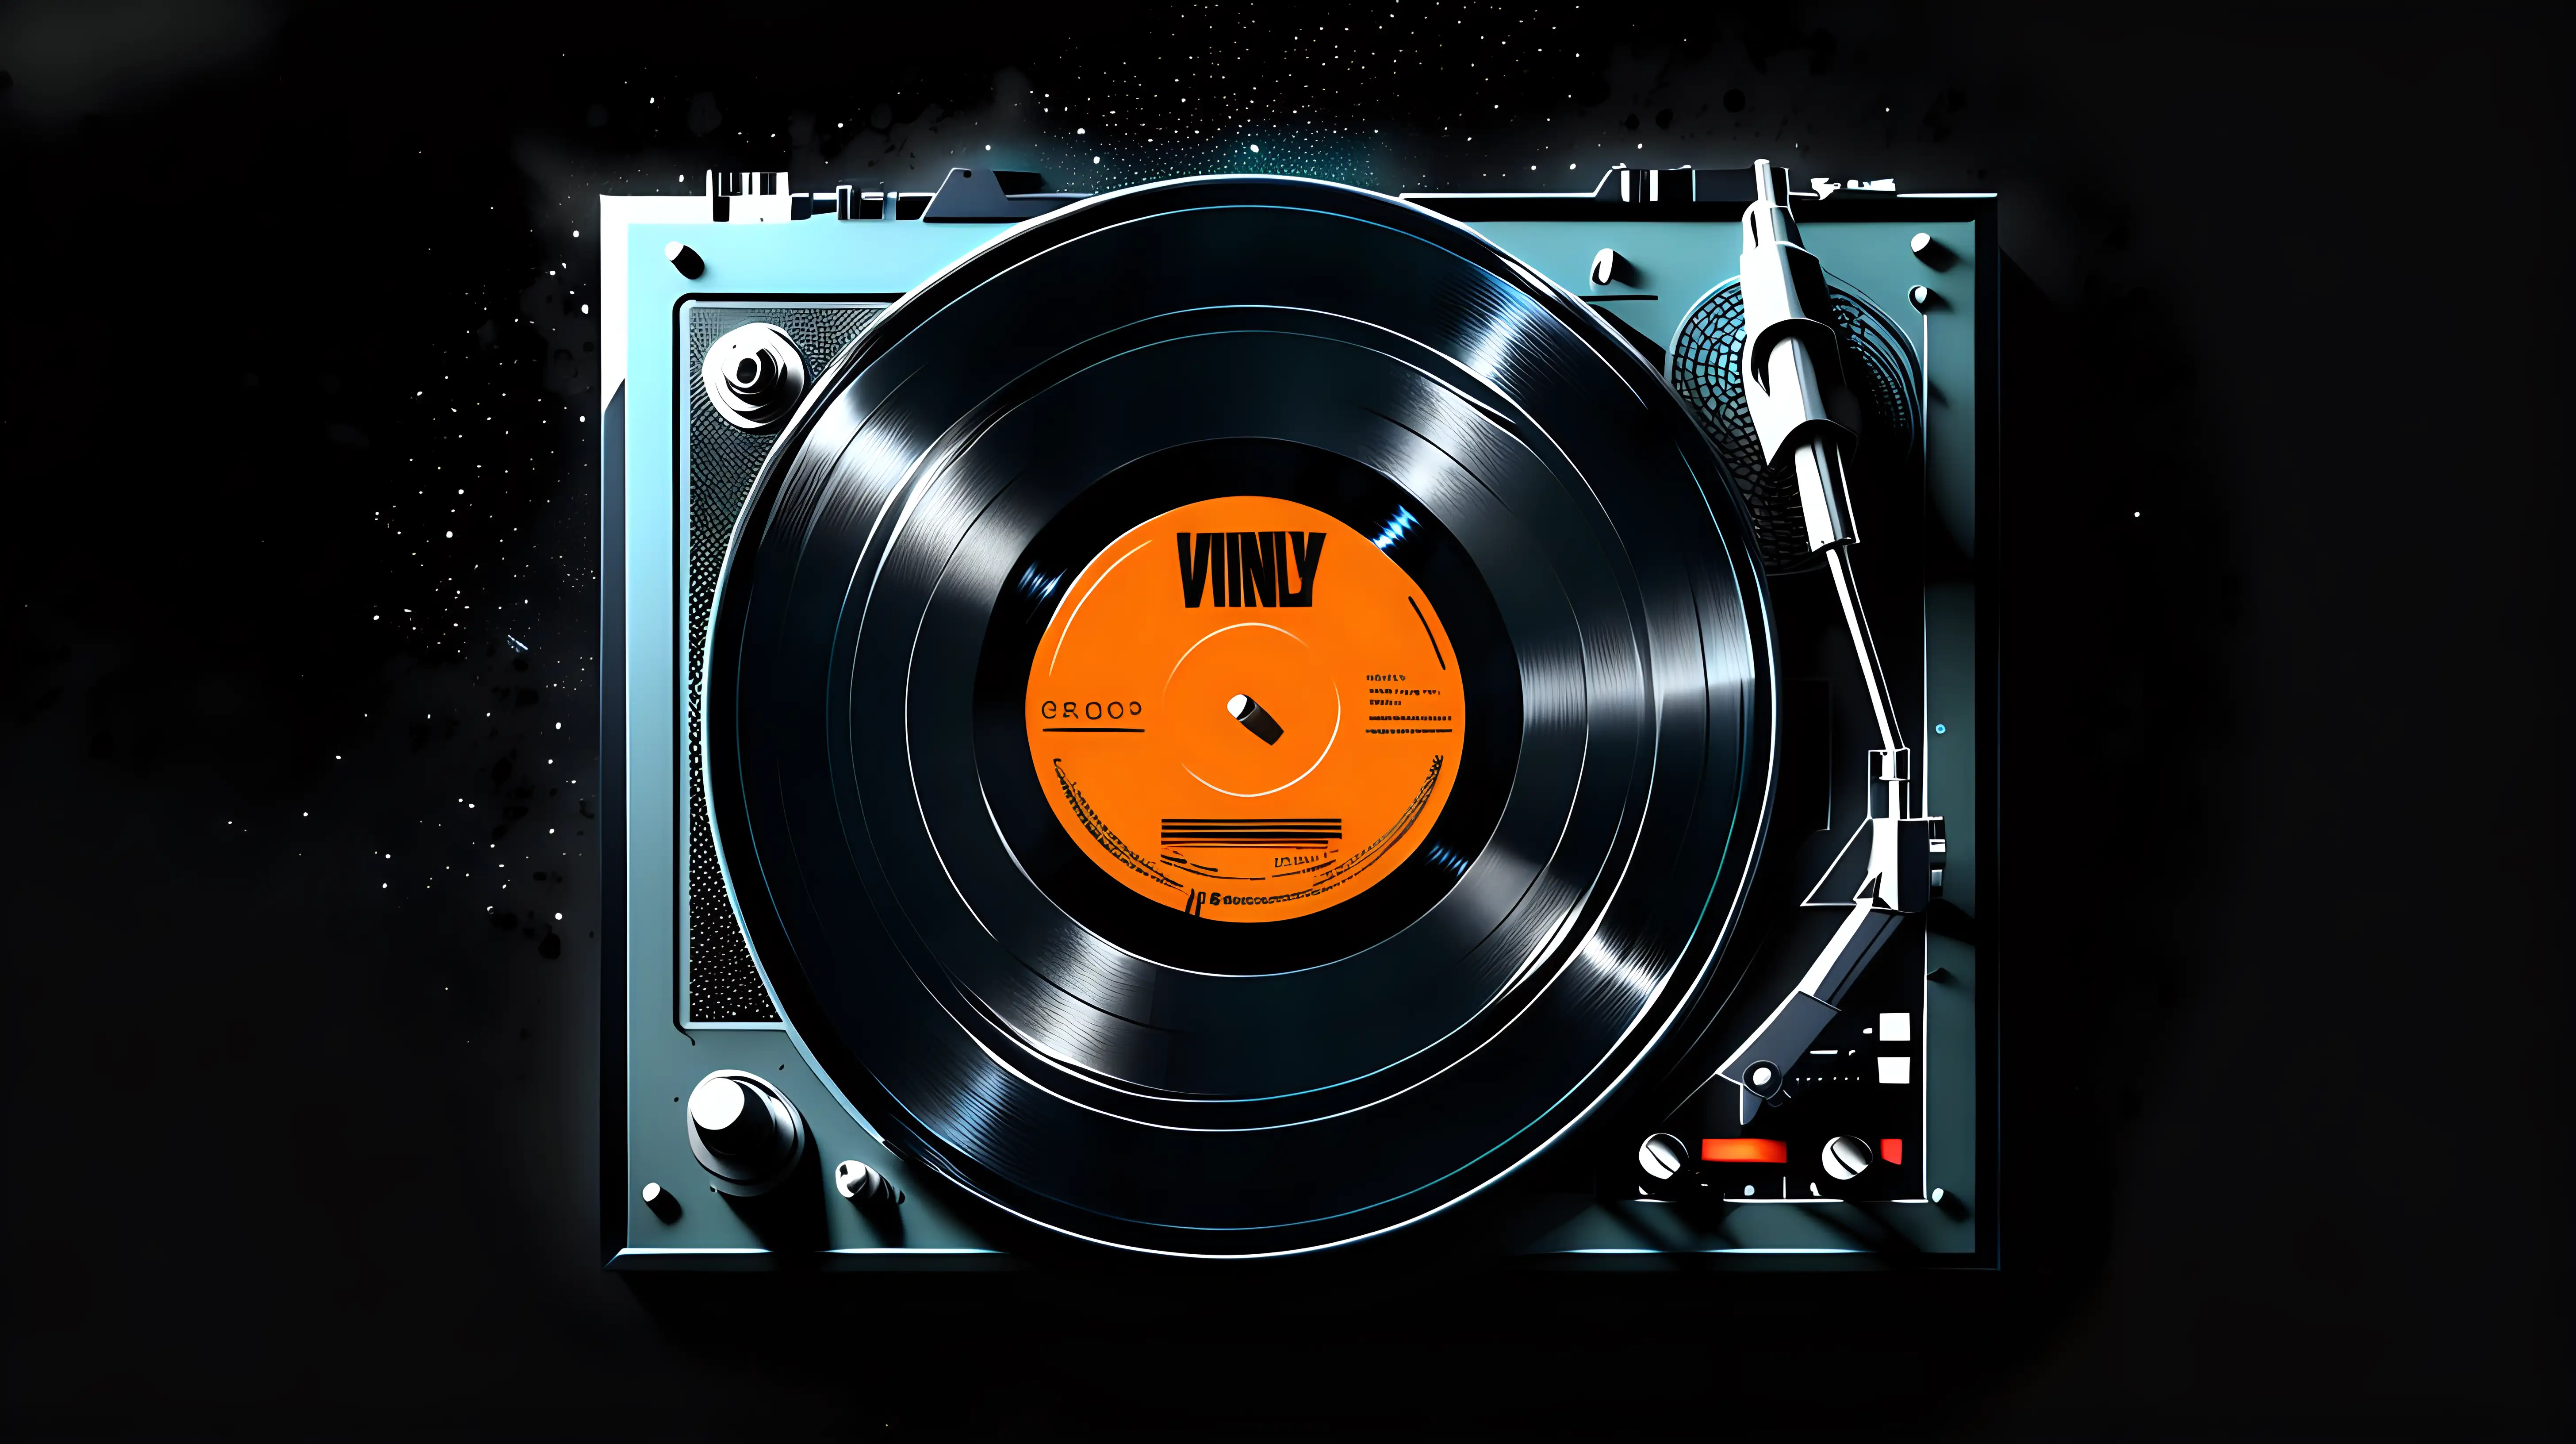 Futuristic Vinyl Record on Black Background RetroFuturism Music Concept Art